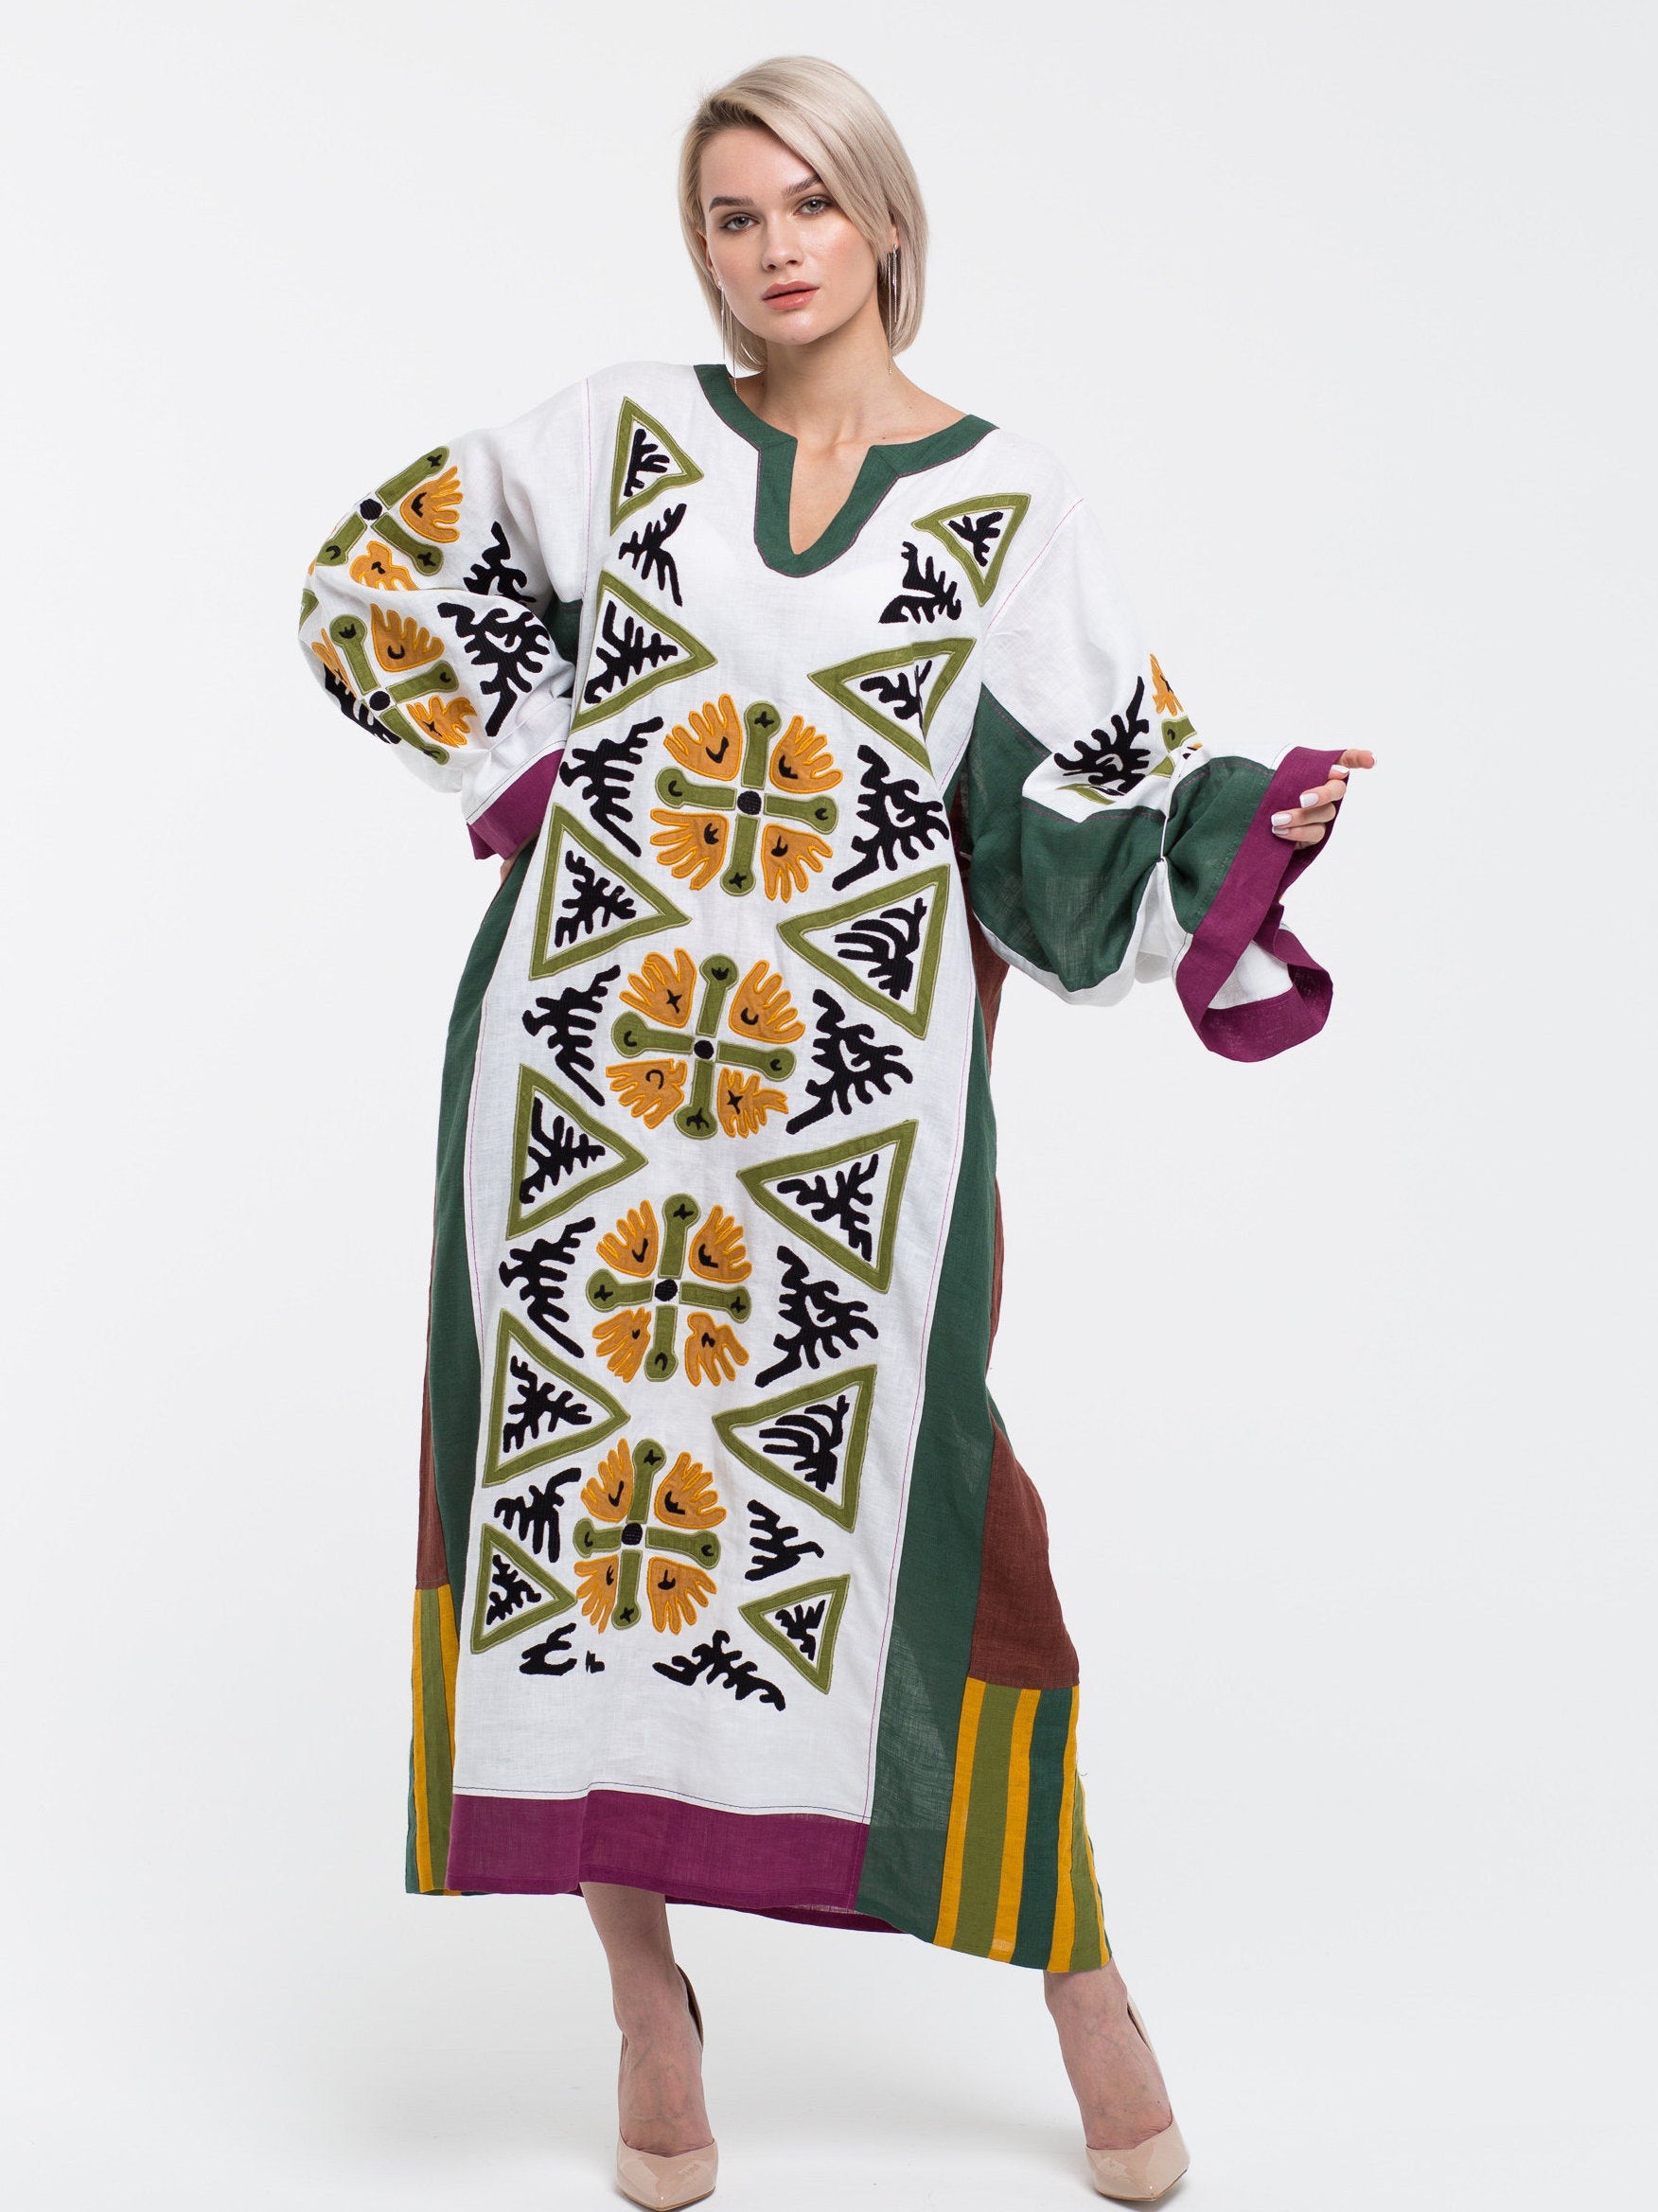 Kaitag applique embroidered linen dress Oversized boho kaftan S-XL